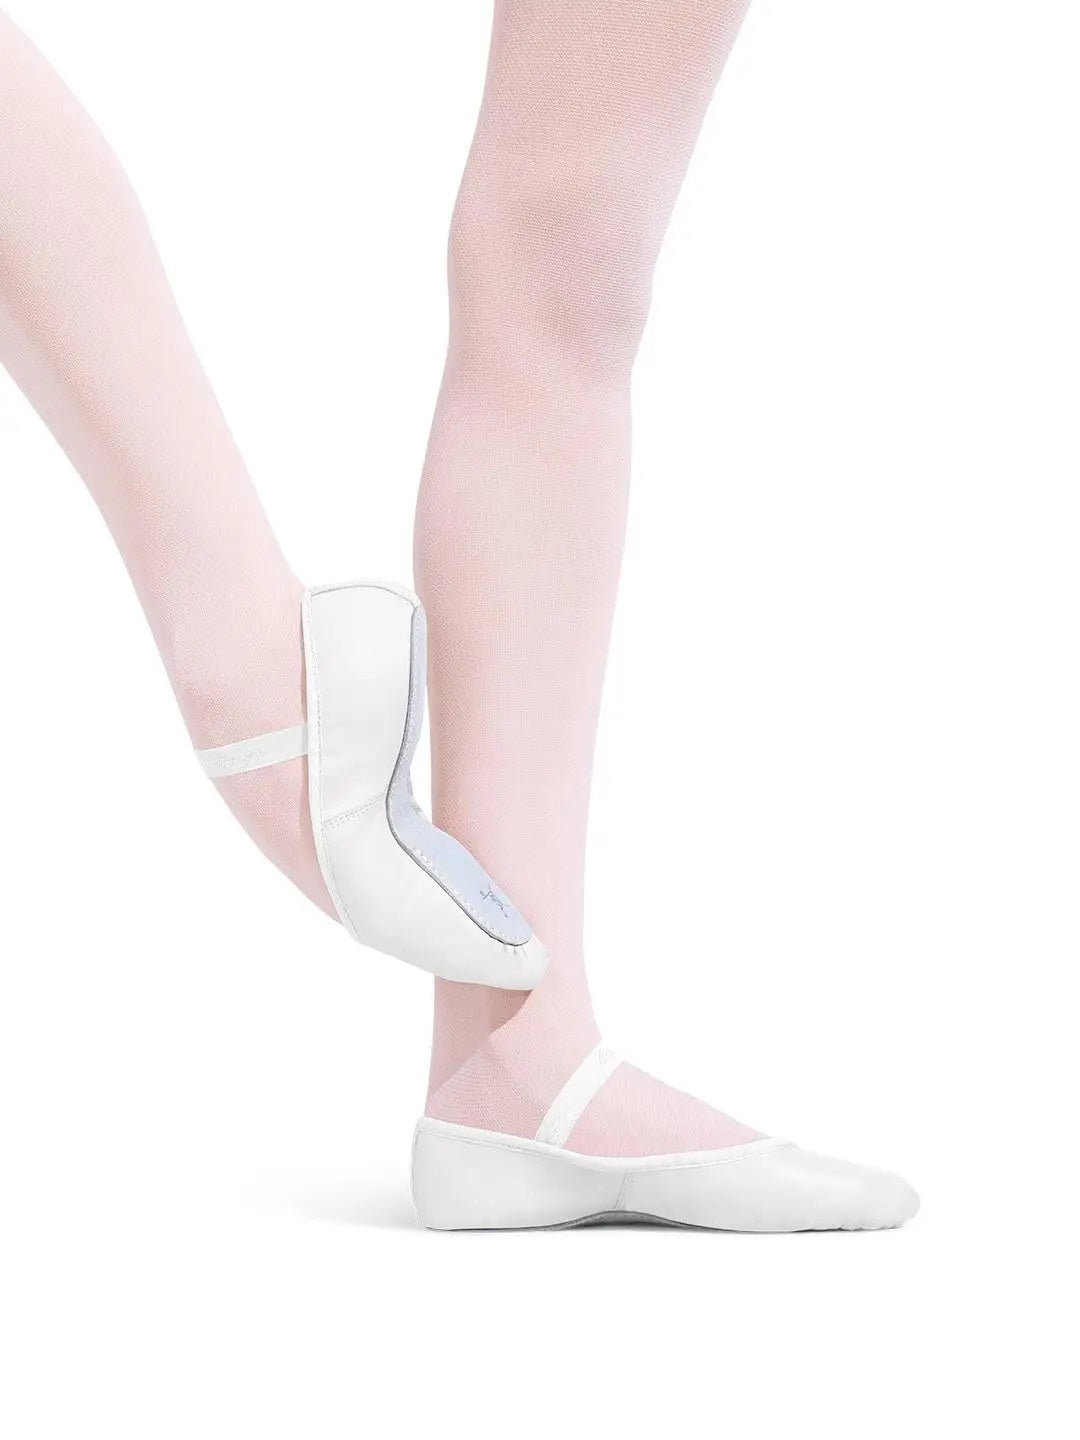 Daisy Ballet Shoe - White